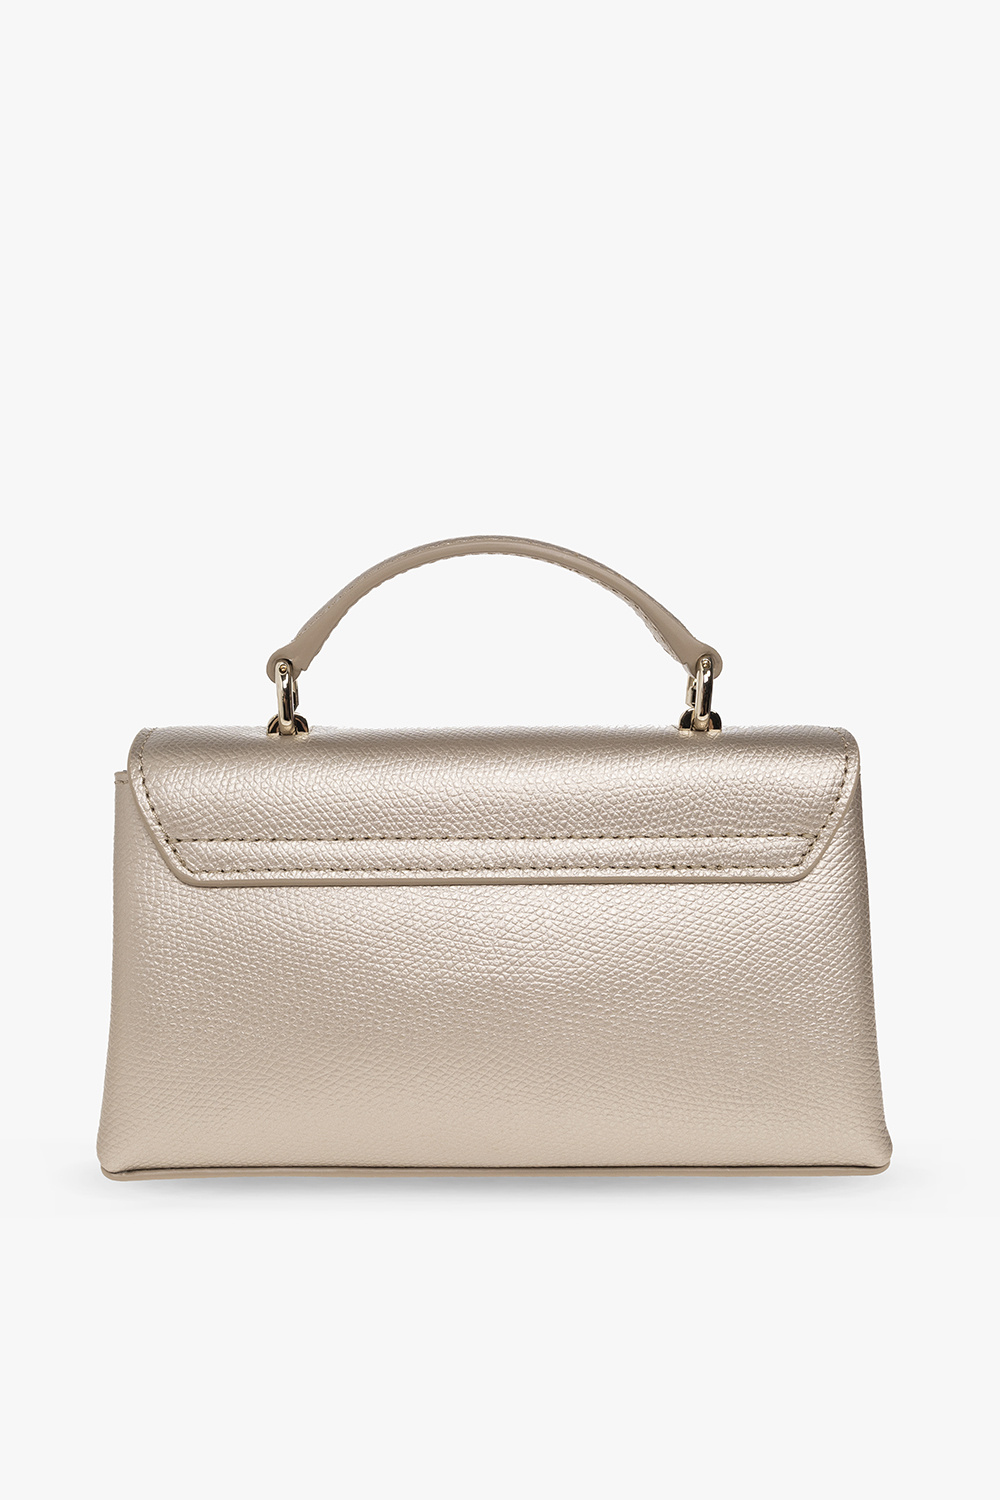 Furla ‘1927 Mini’ shoulder Taschen bag